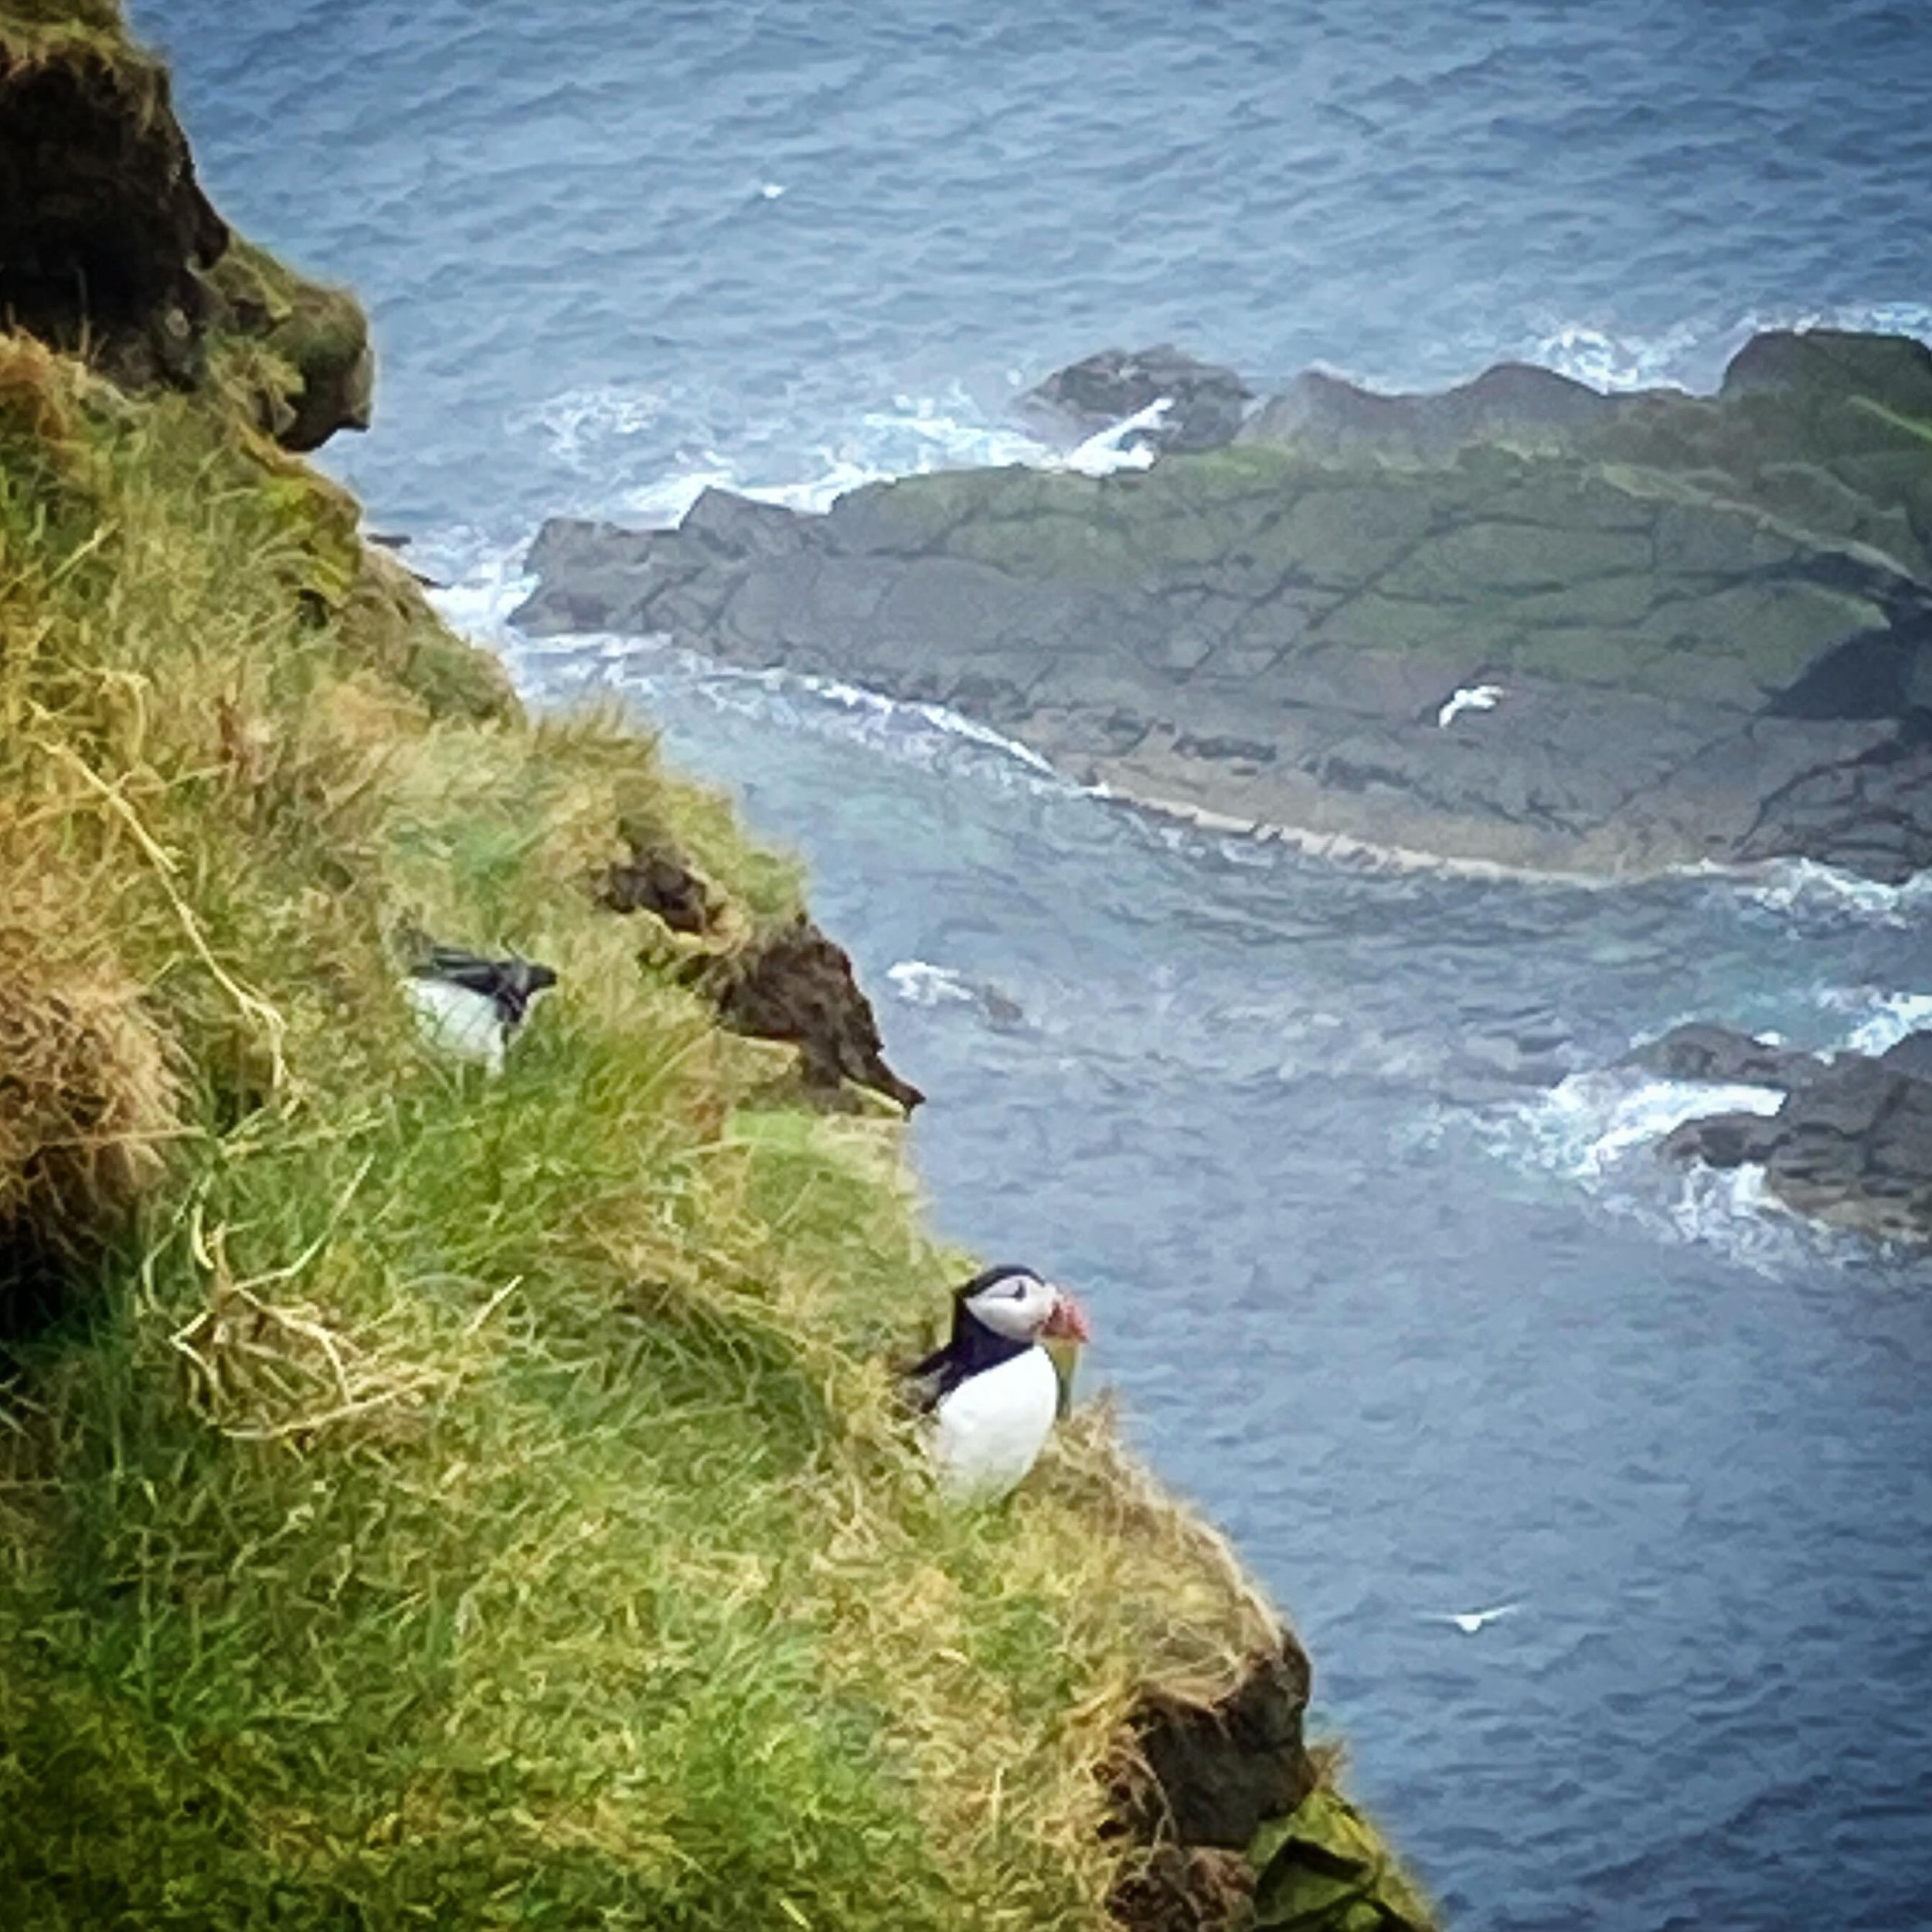 Tammy Norrie. #padeapix #puffins #sumburghhead #shetland #northernisles #seabirds